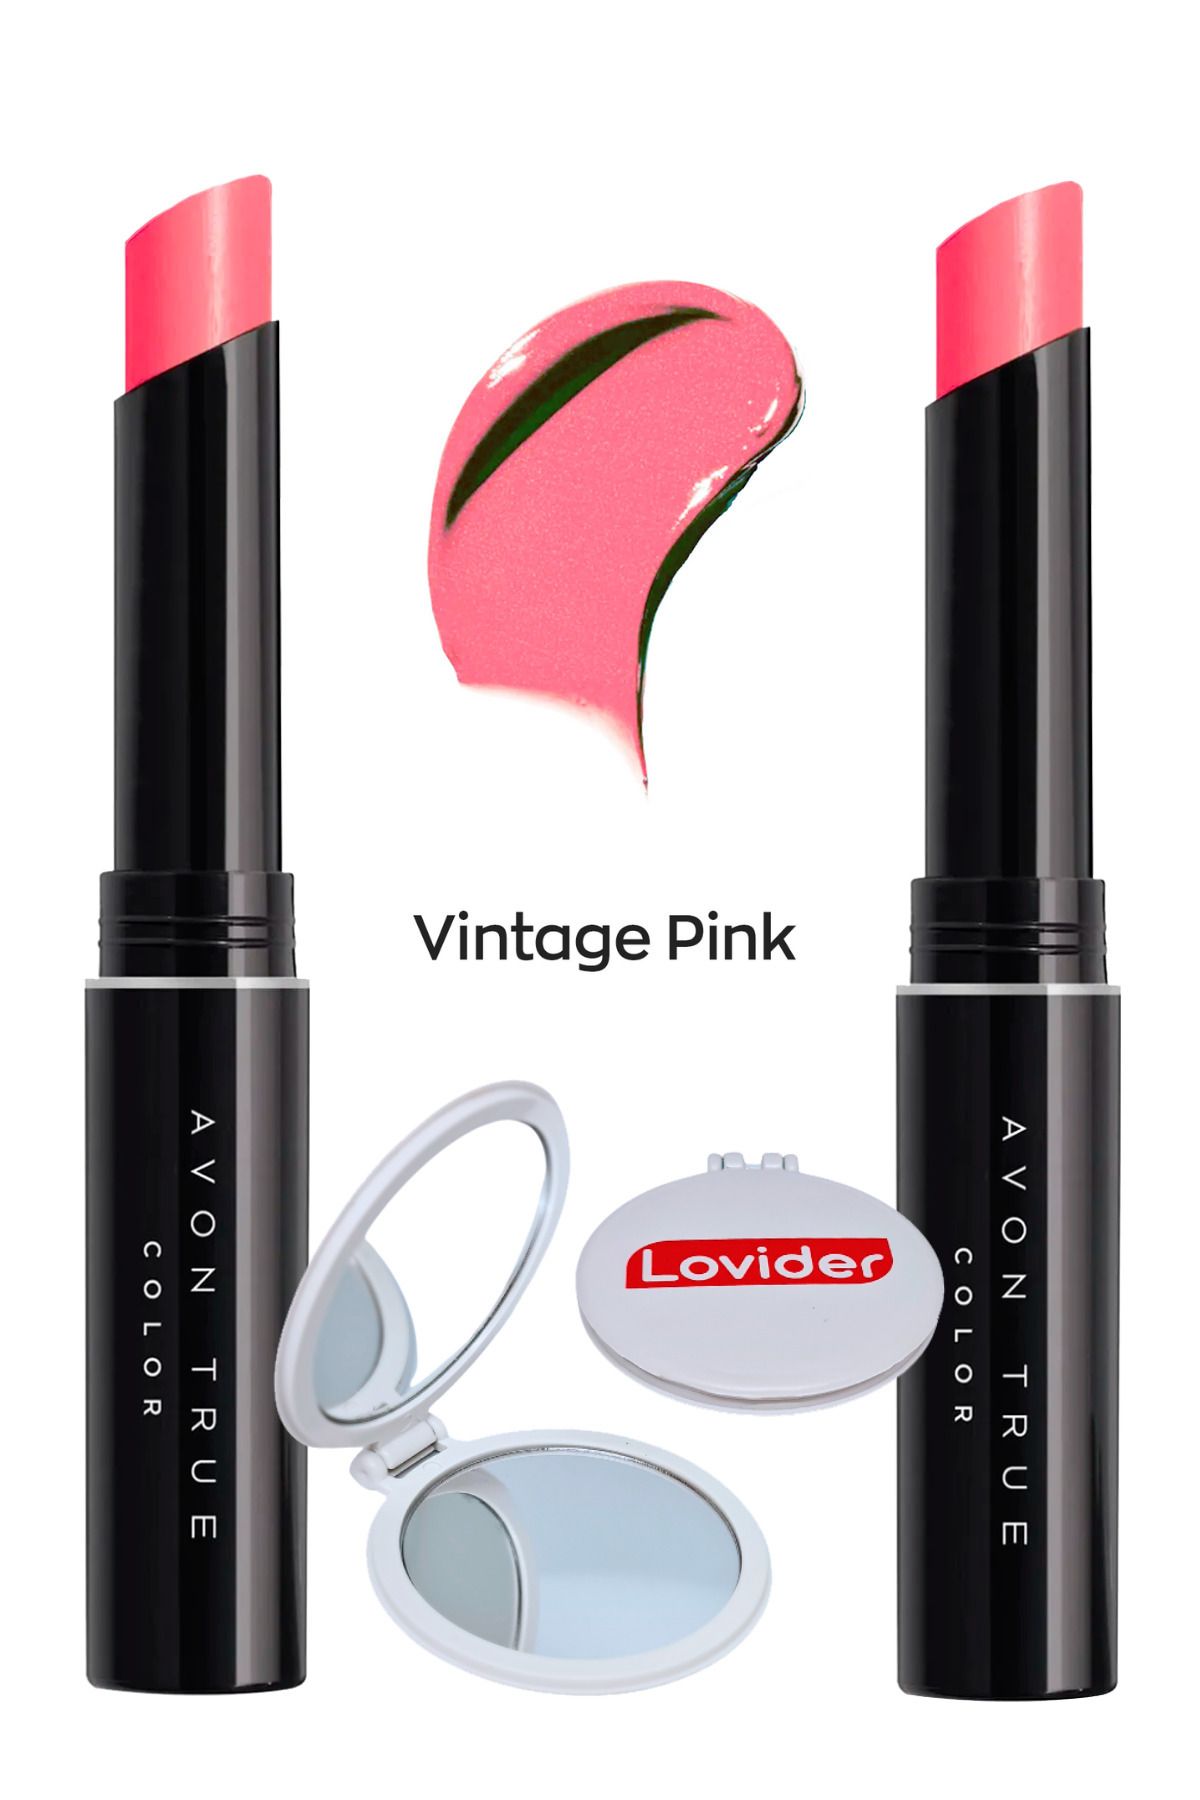 Avon True Colour Ultra Beauty Ruj - Vintage Pink 2'li + Lovider Cep Aynası Hediye